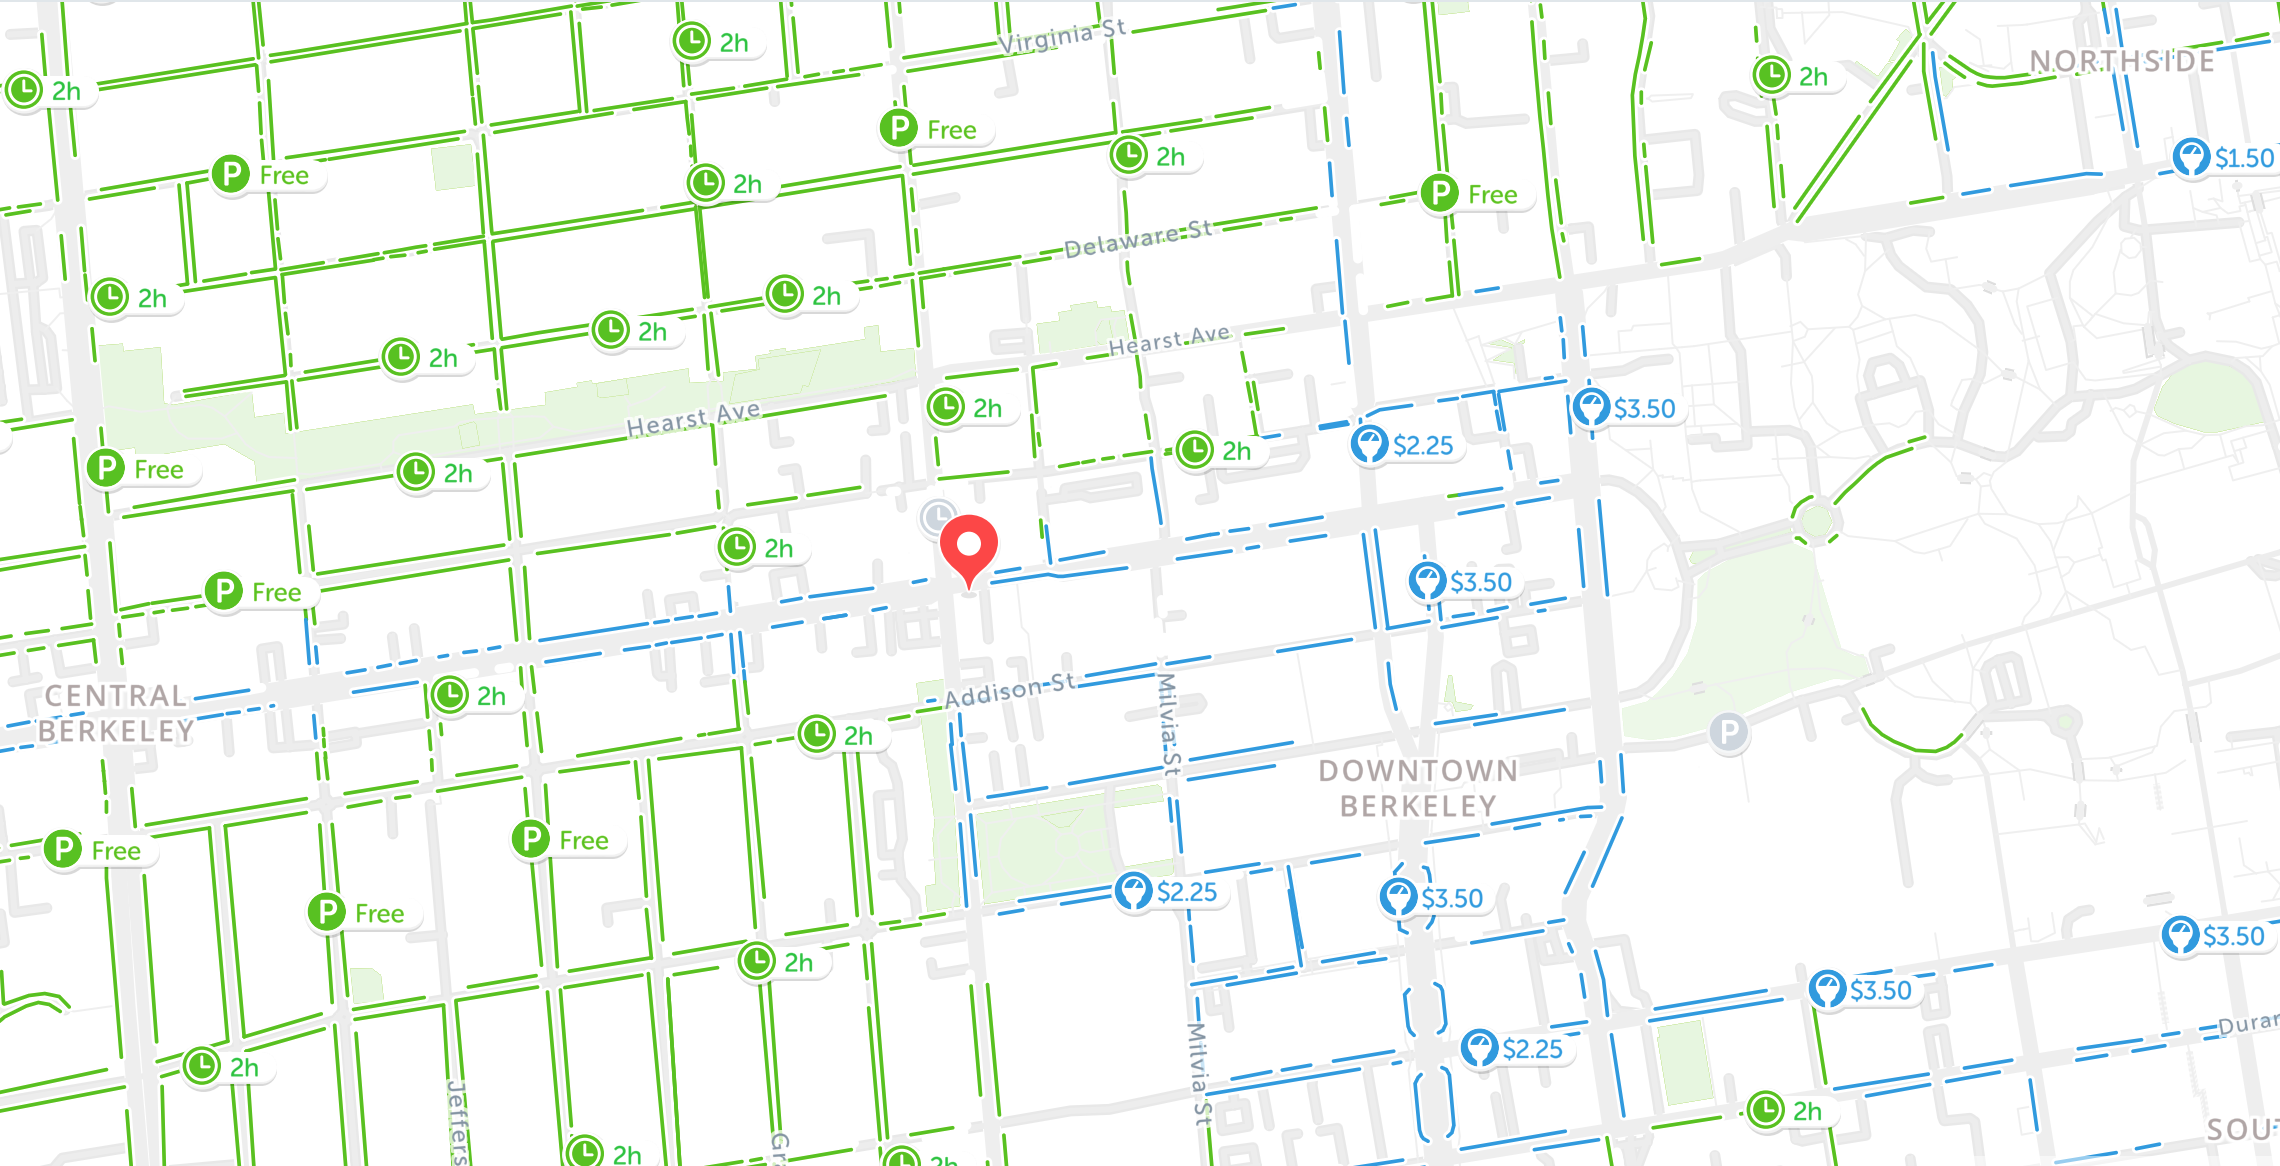 Berkeley street parking map